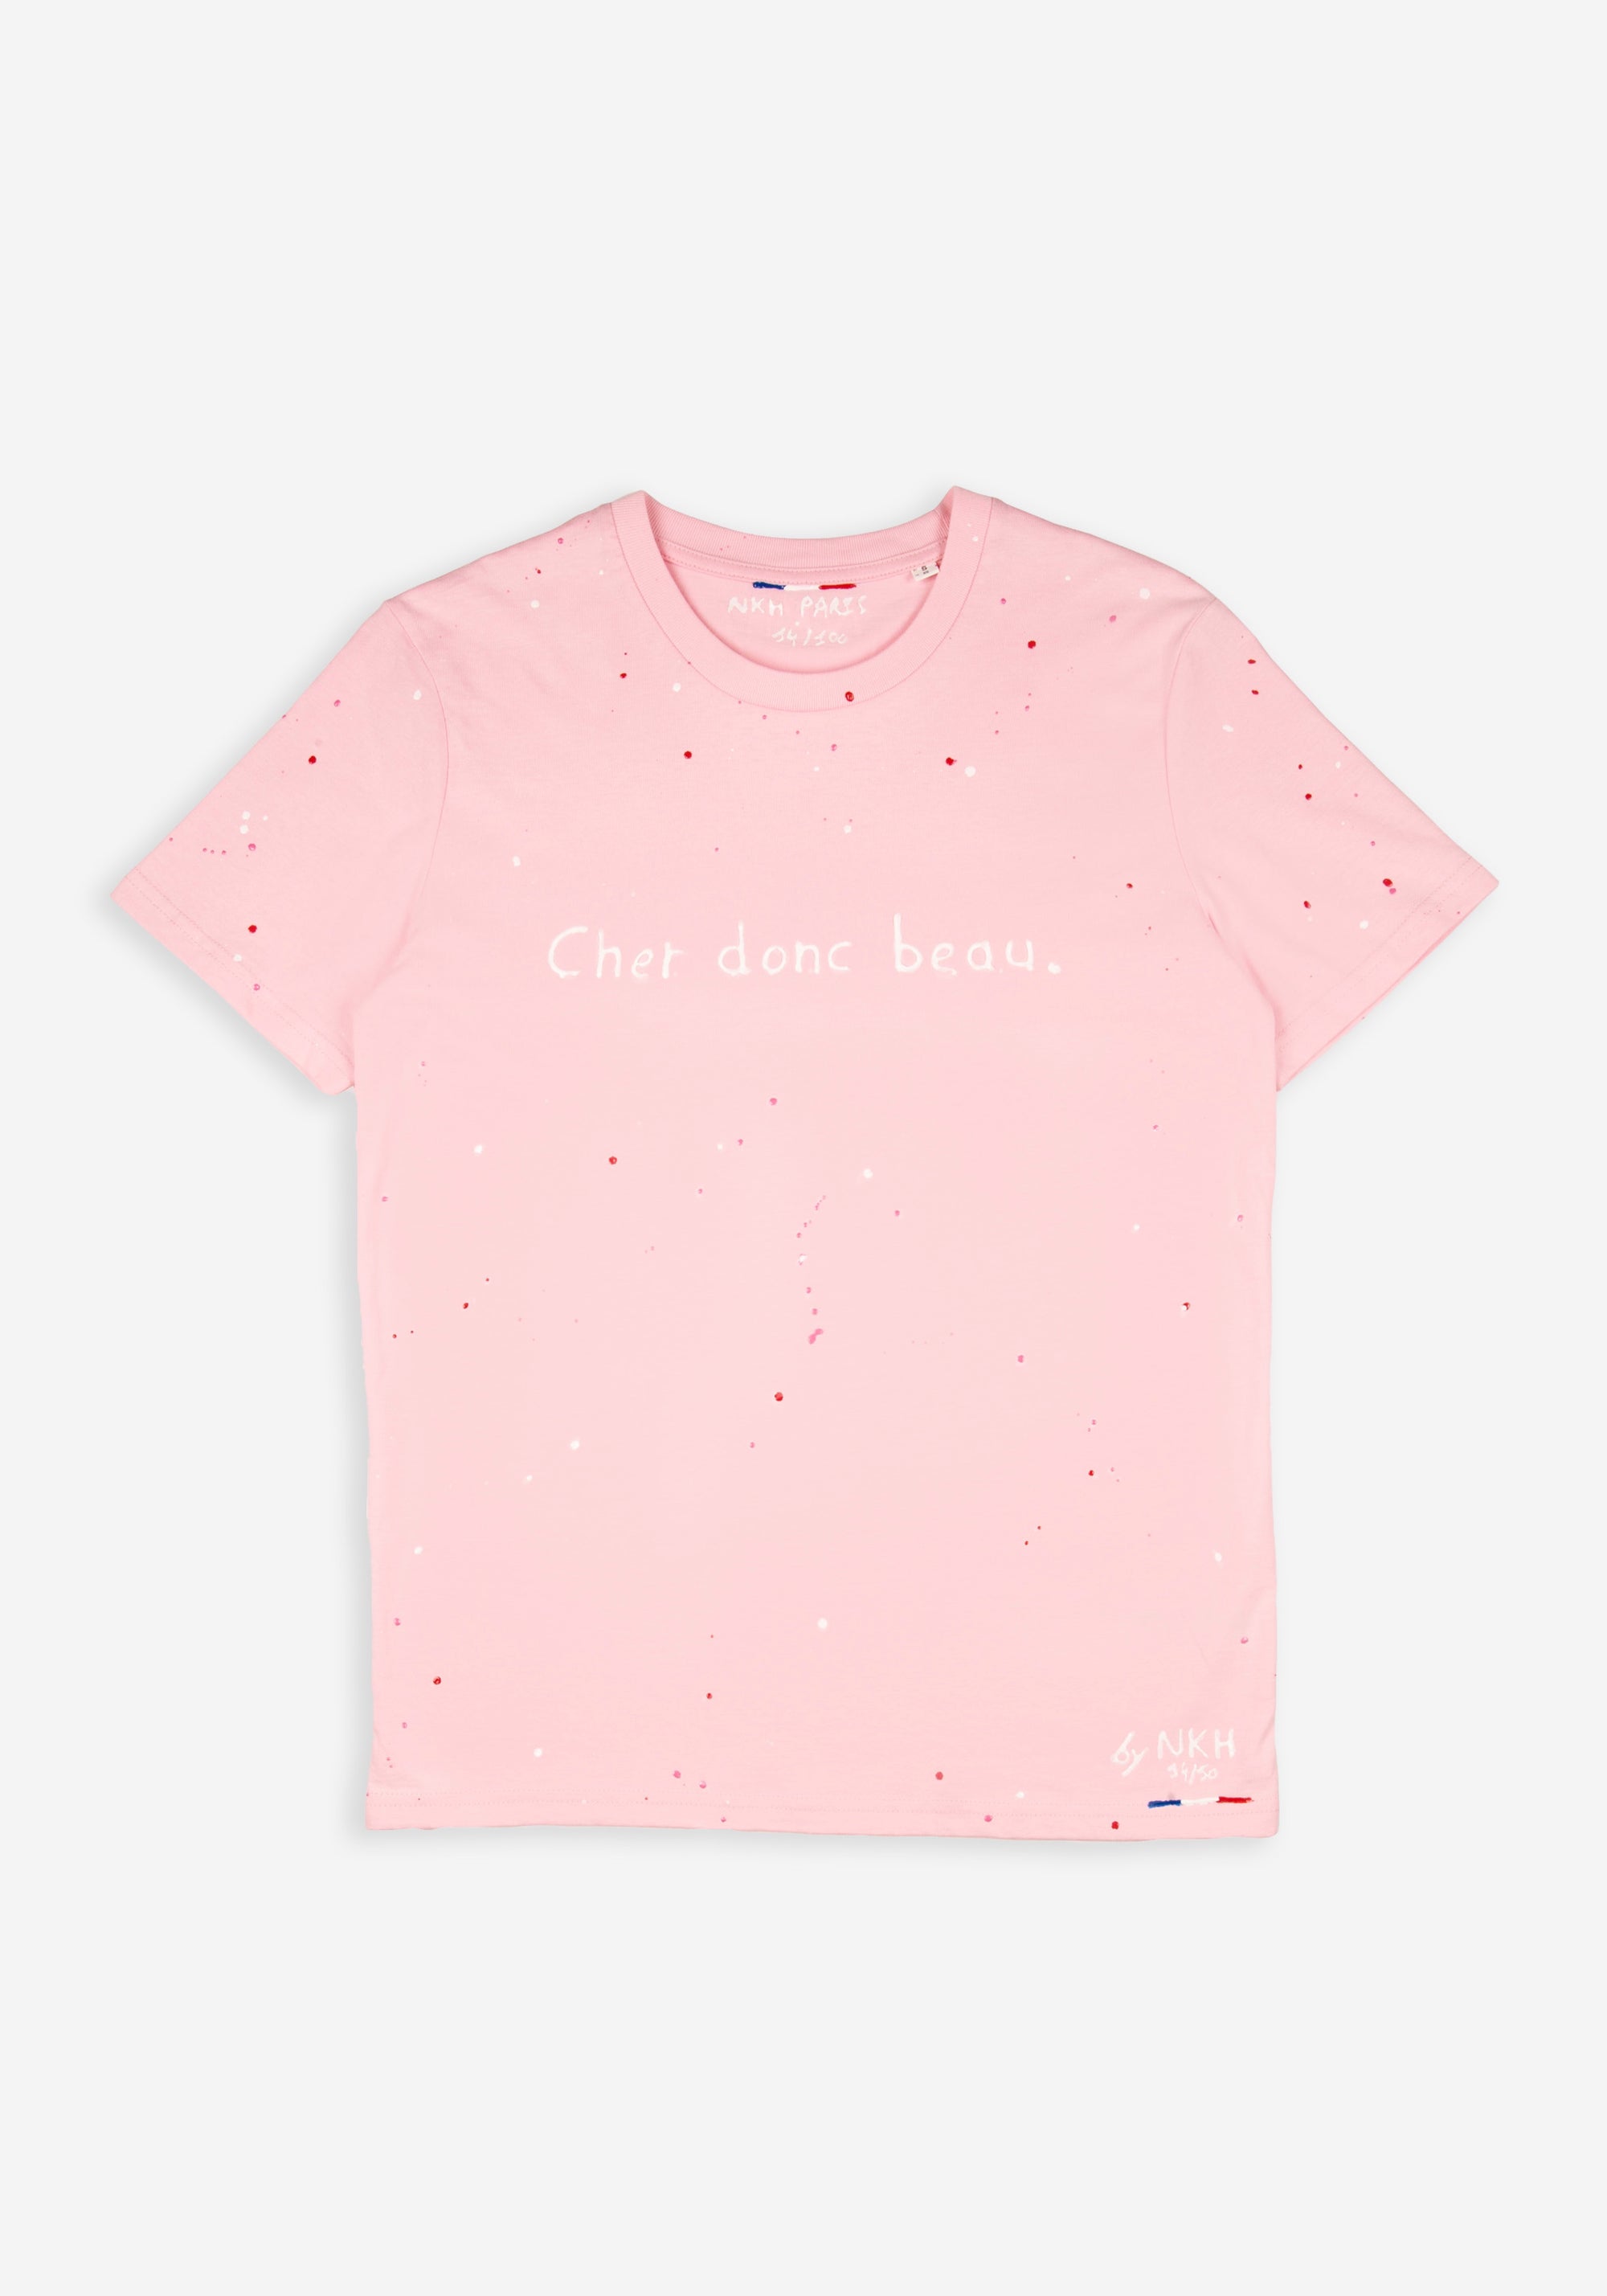 Tee-shirt rose - Cher donc beau